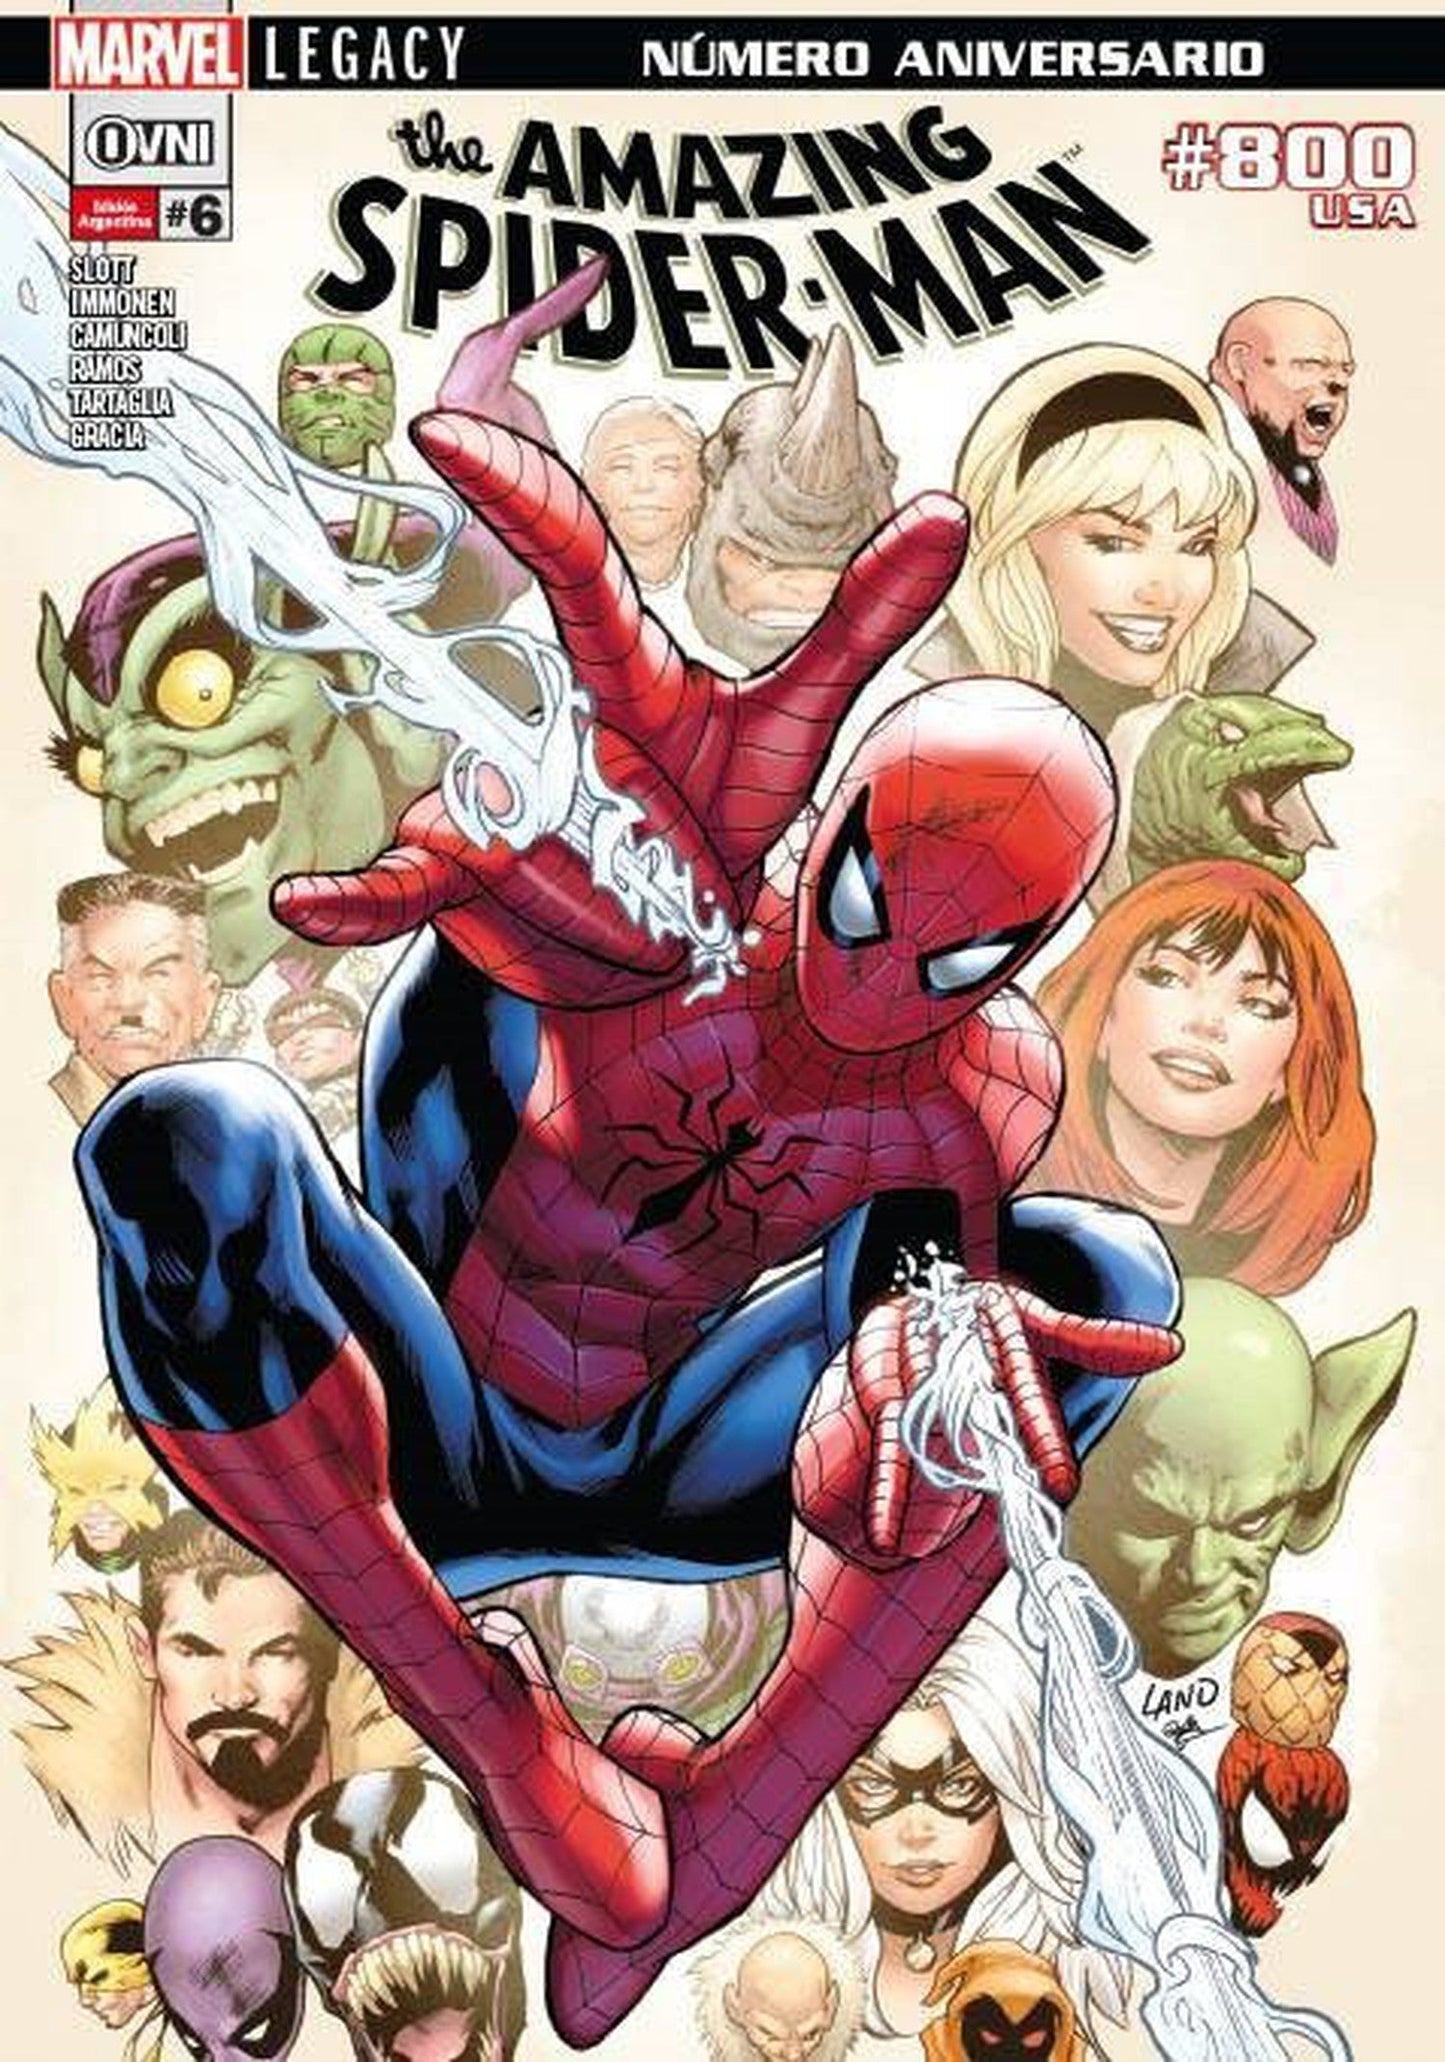 Marvel Legacy: Amazing Spider-Man #6 Número Aniversario #800 OVNI Press ENcuadrocomics